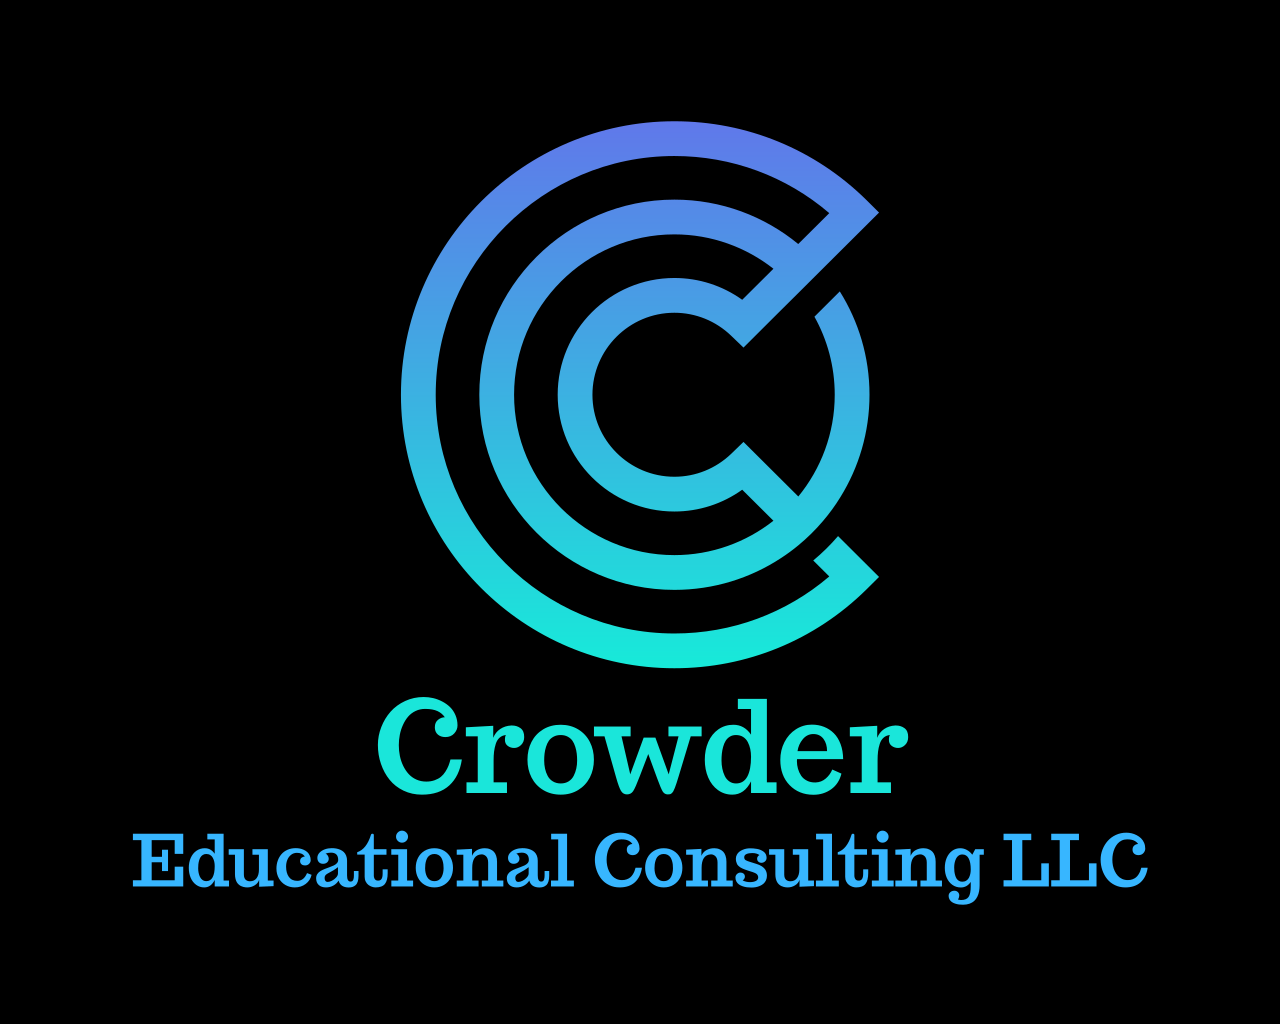 Crowder Educational Consulting, LLC